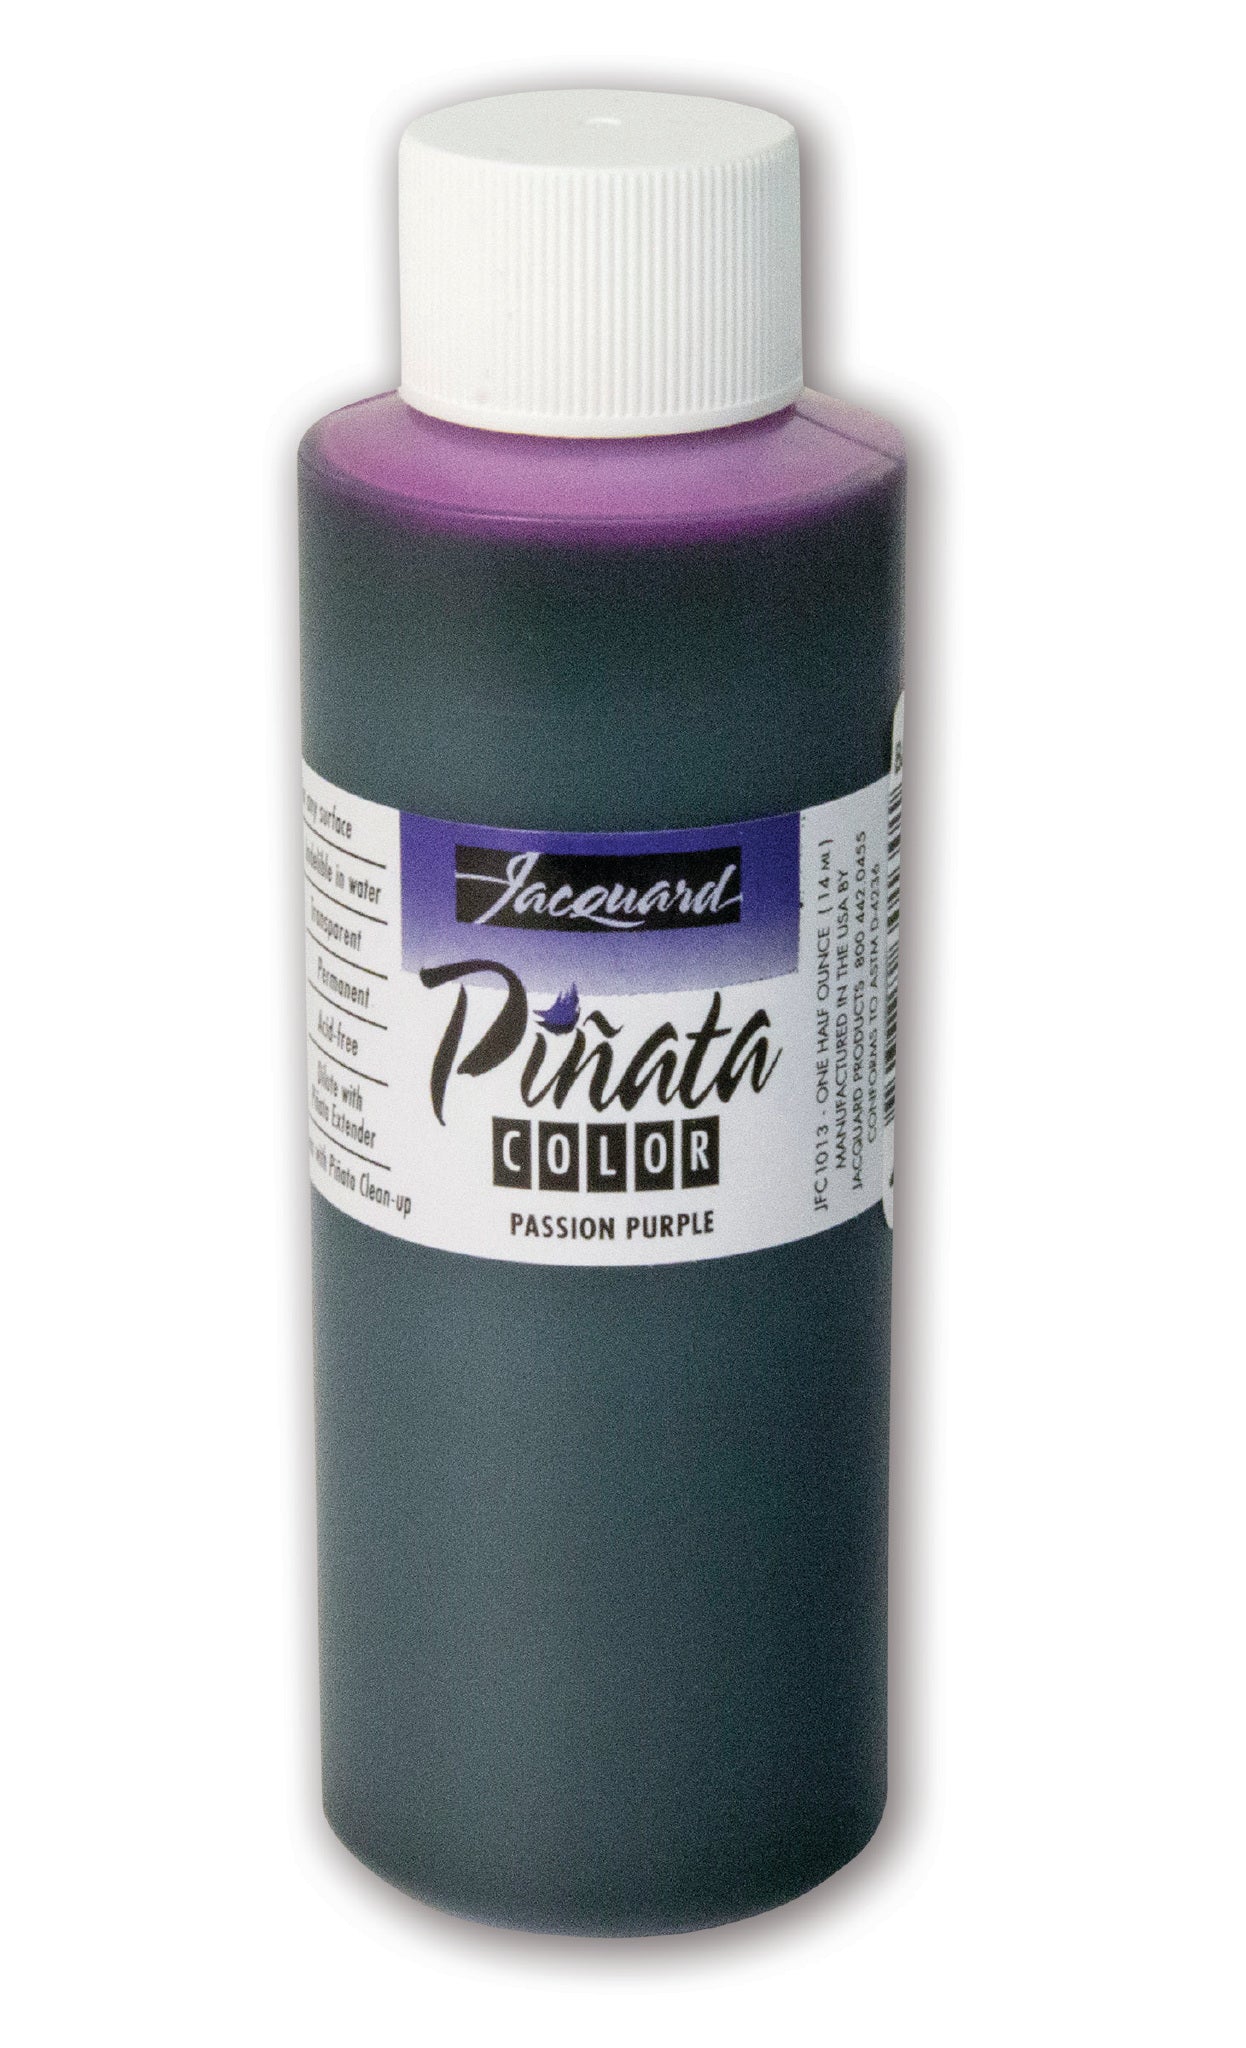 Jacquard Pinata Ink 120ml Passion Purple - theartshop.com.au